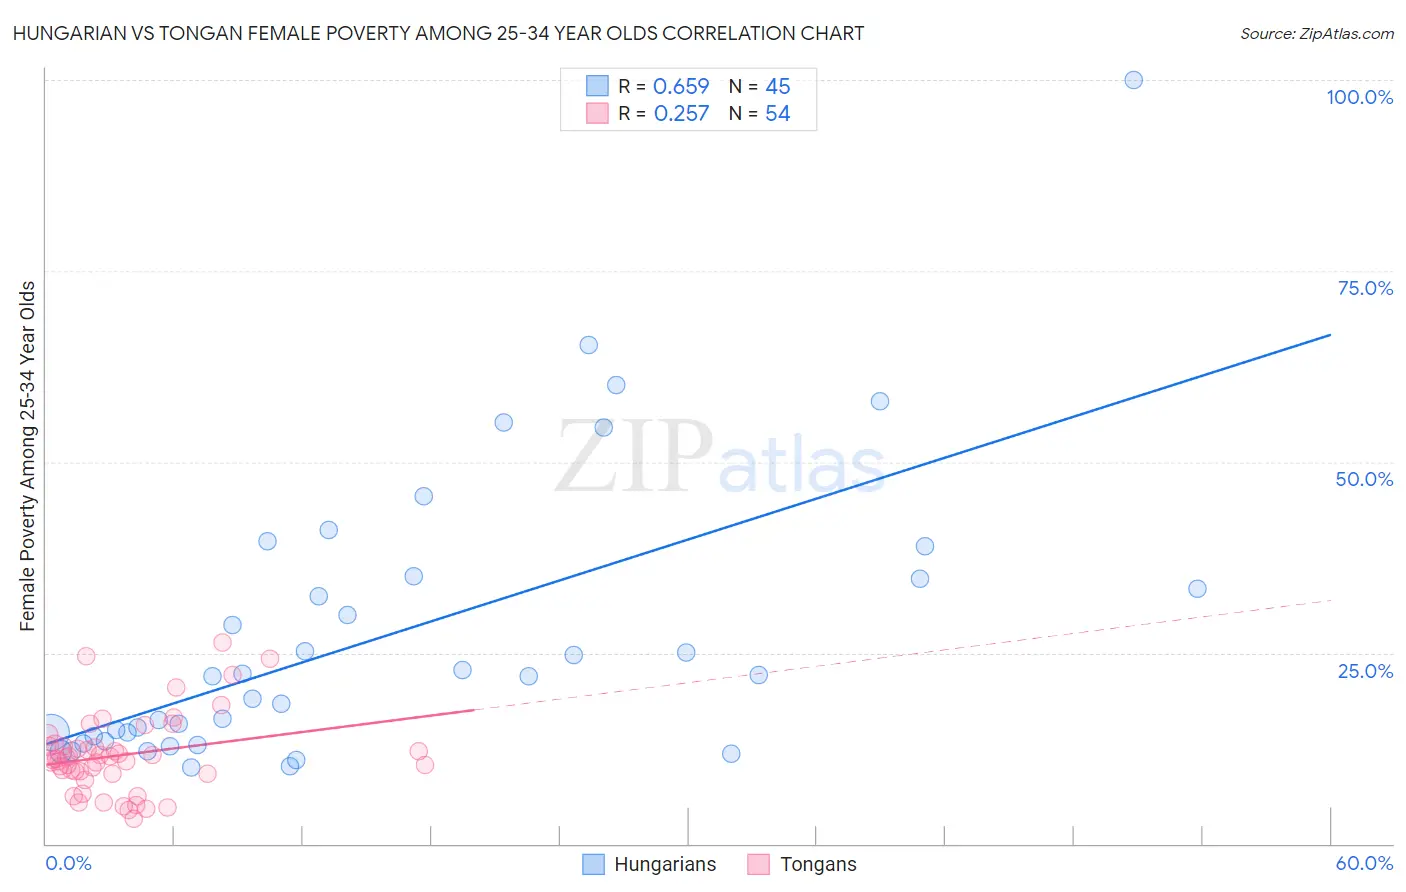 Hungarian vs Tongan Female Poverty Among 25-34 Year Olds